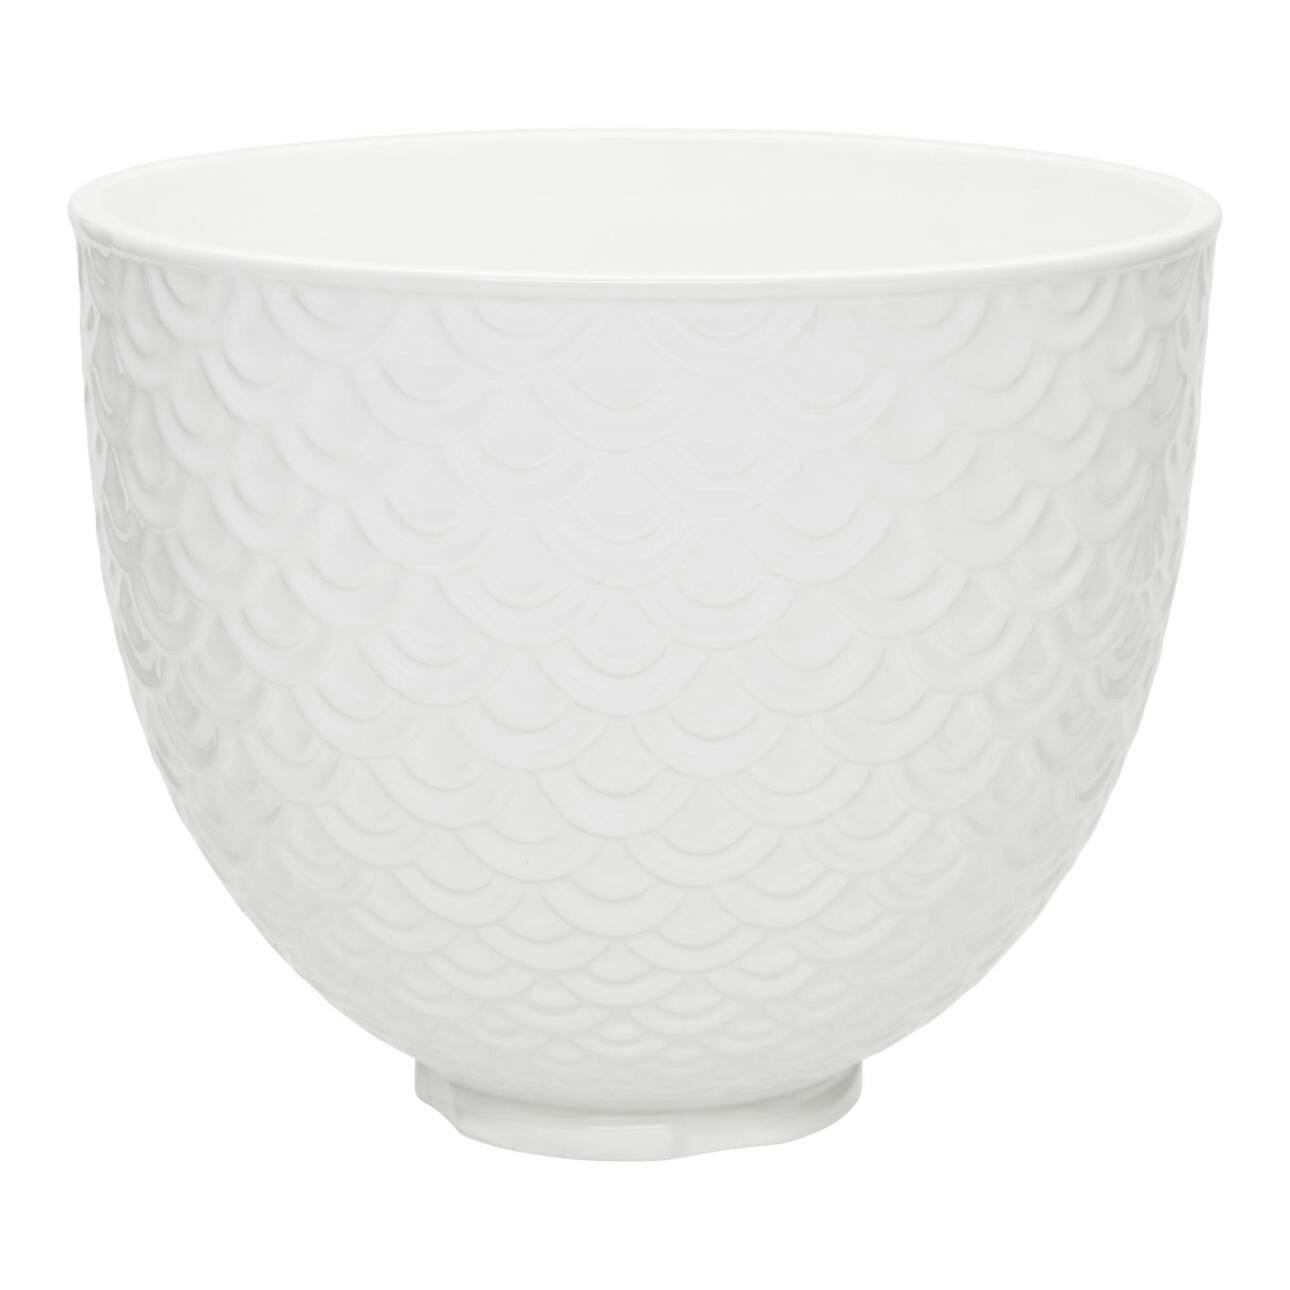 Elegant White Mermaid Lace 1.2 Gal Ceramic Mixer Bowl